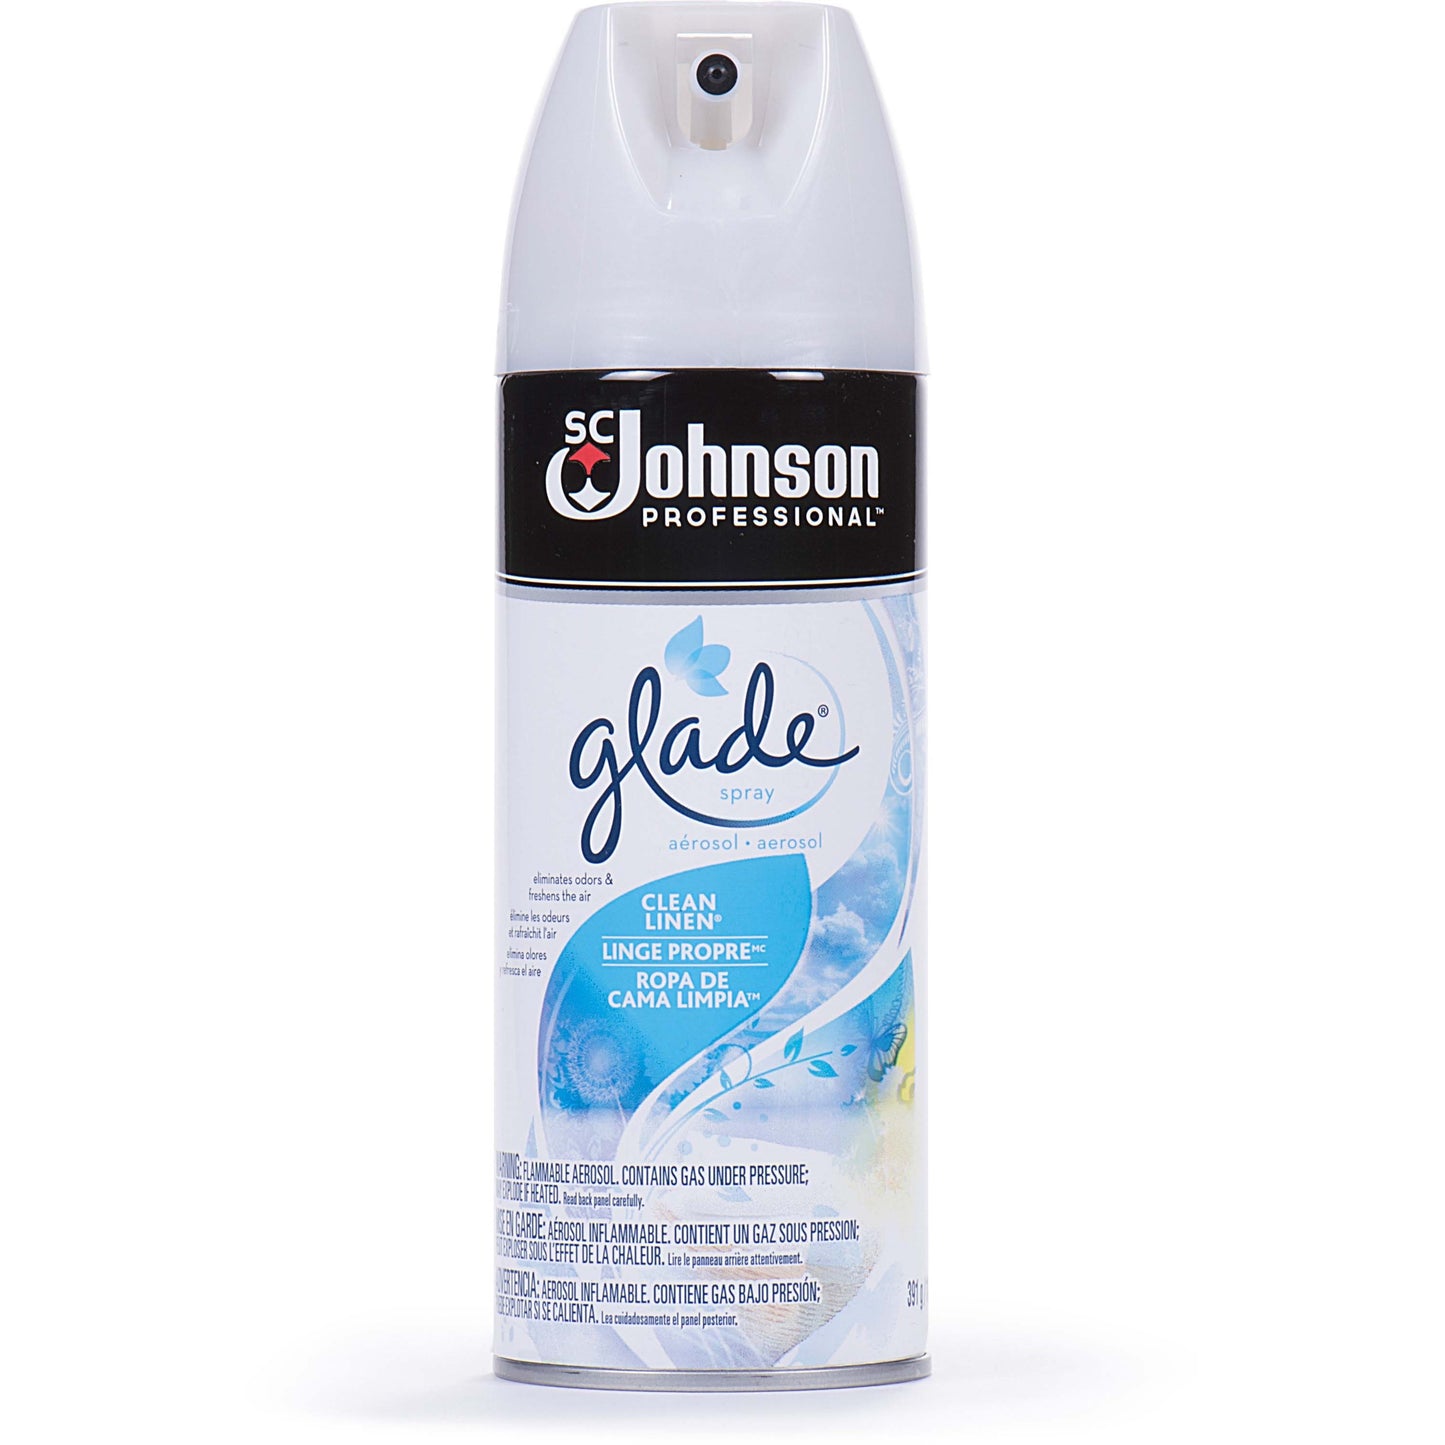 Glade Scented Air Freshener Spray